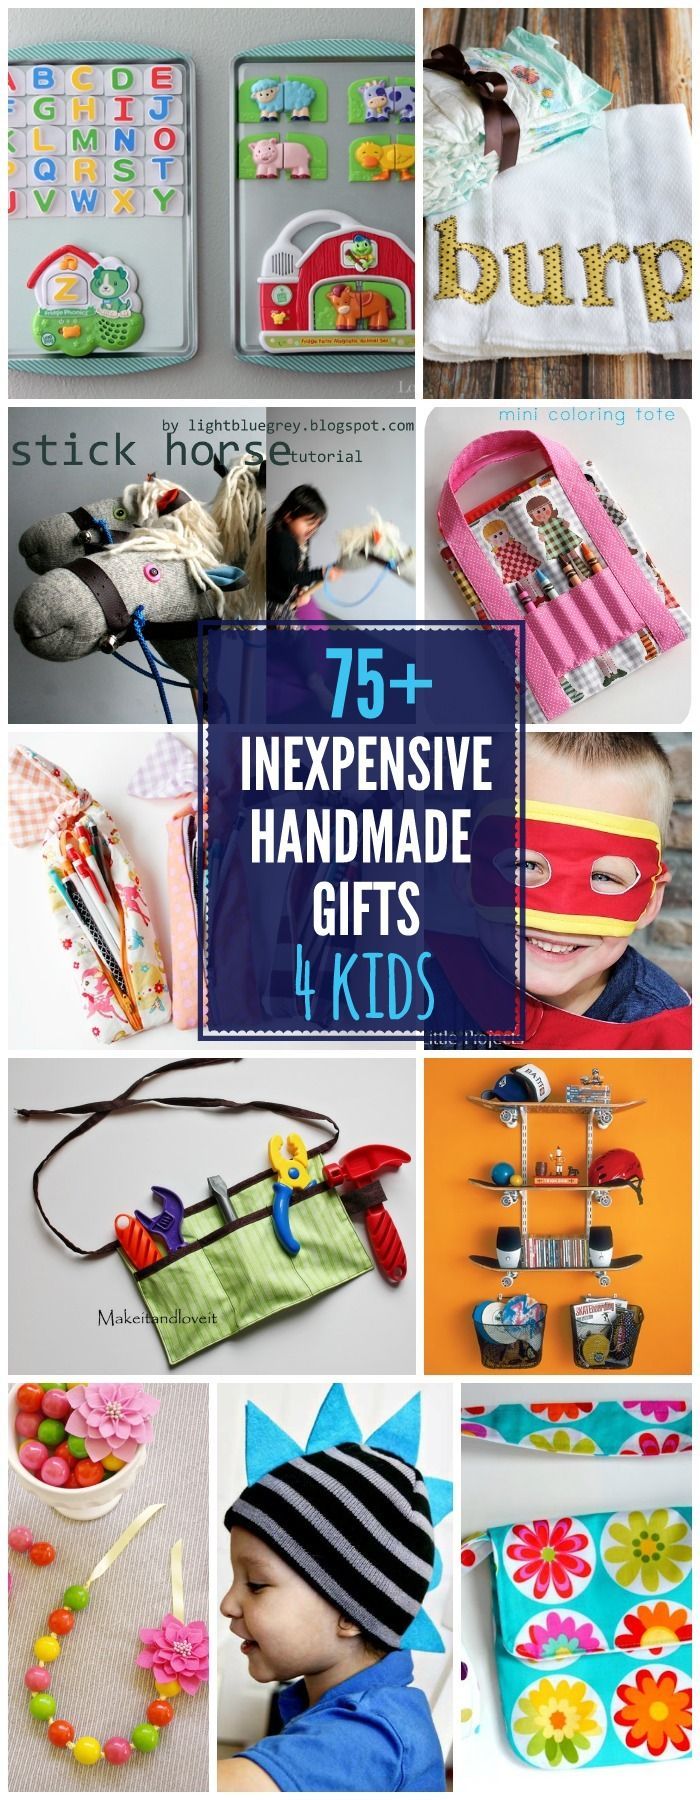 16 diy Gifts for children ideas